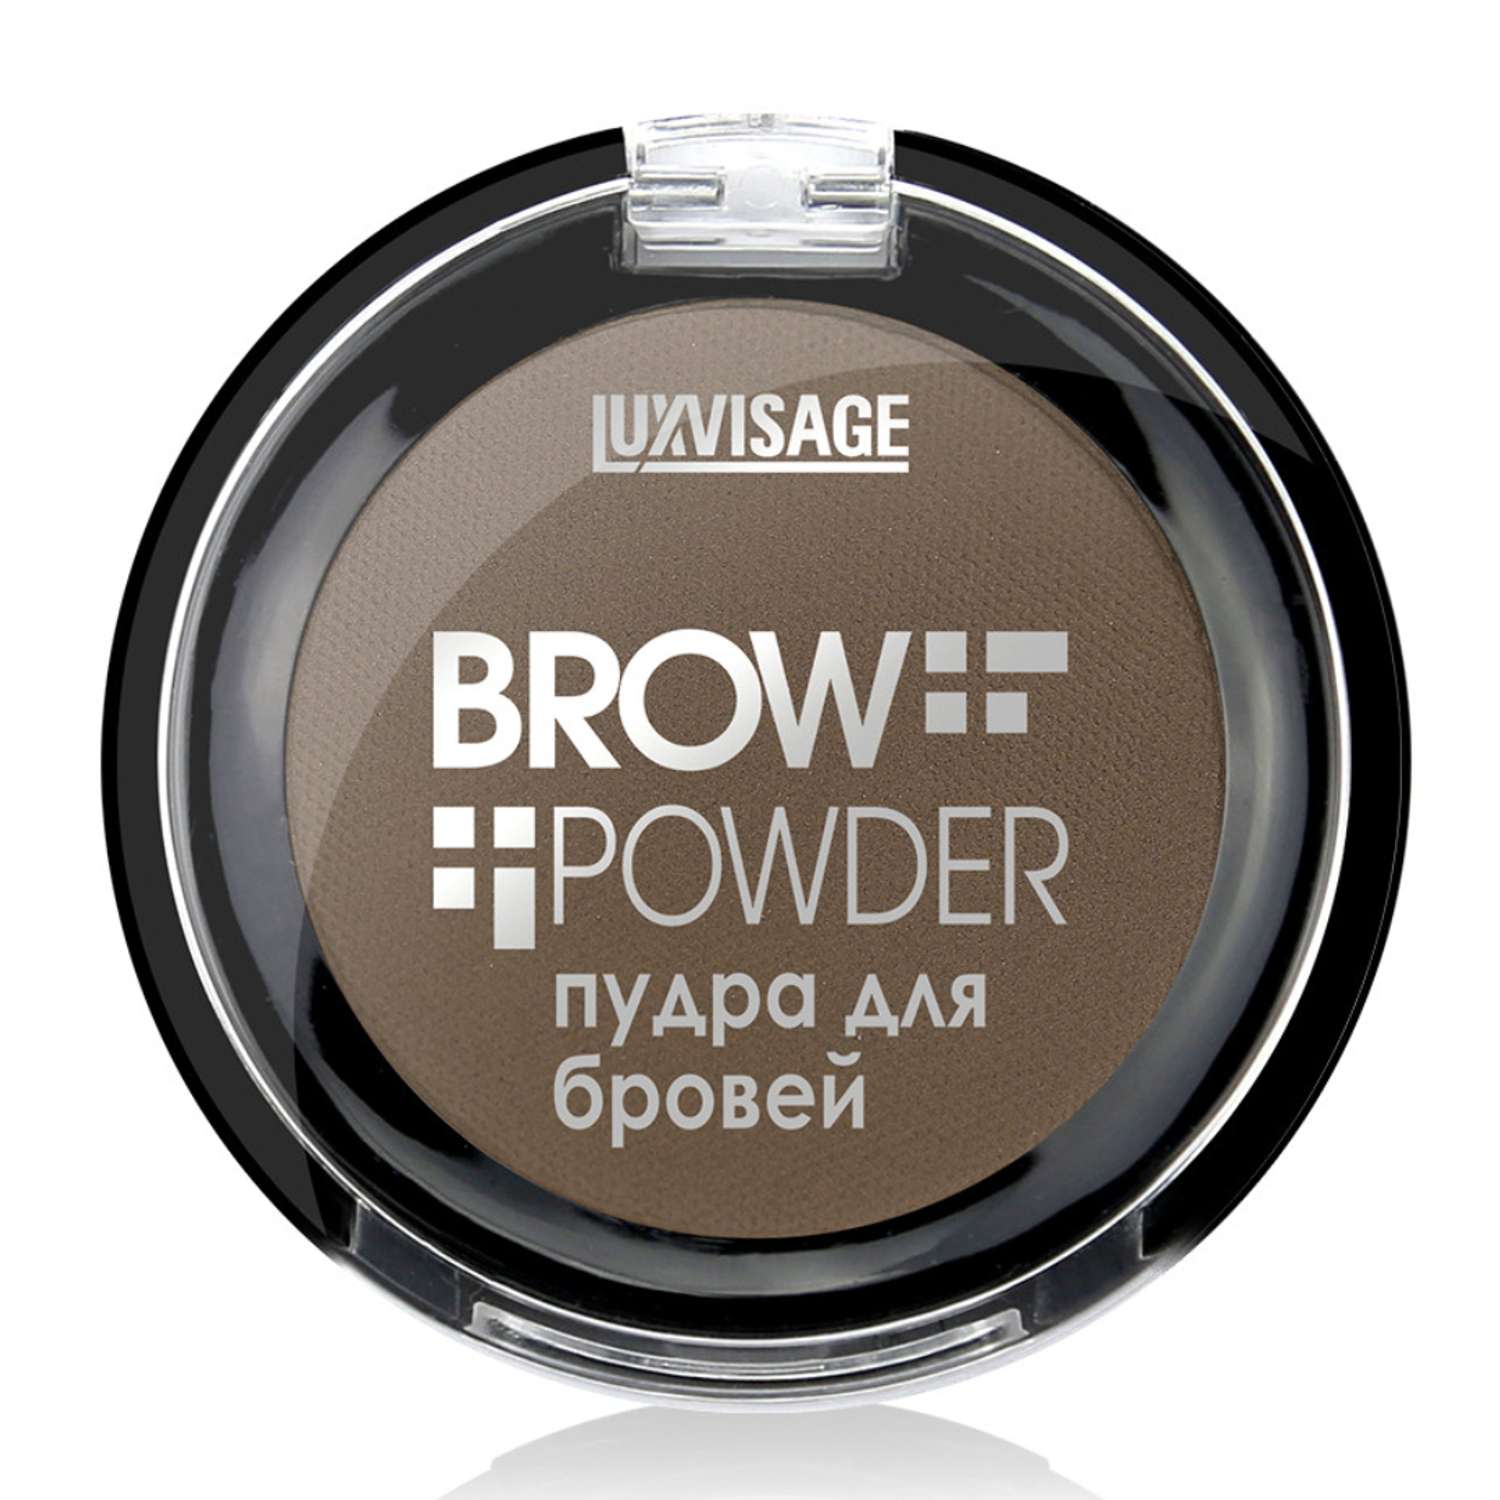 Тени для бровей Luxvisage тон 3 Grey brown - фото 1